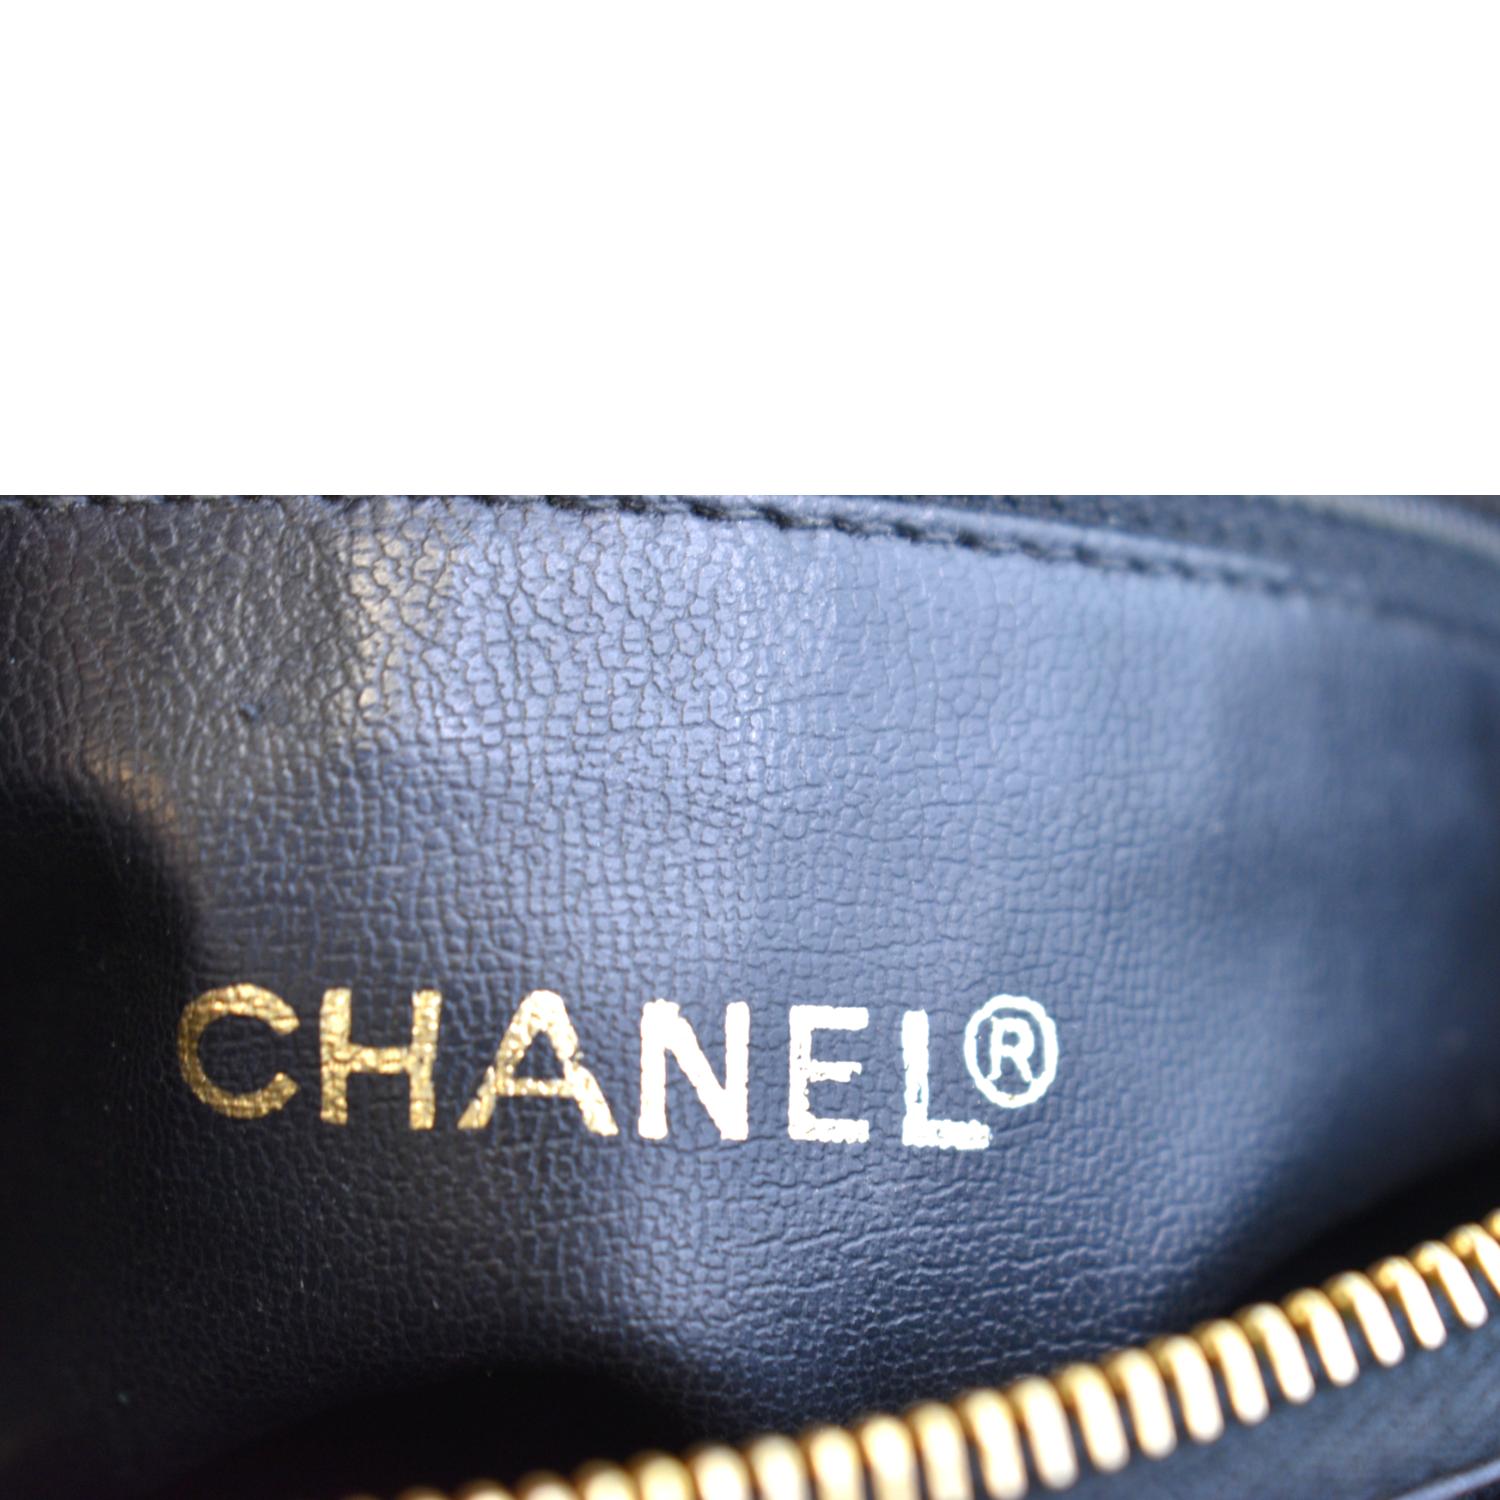 used Chanel Vintage Black Caviar Leather Zip Bag